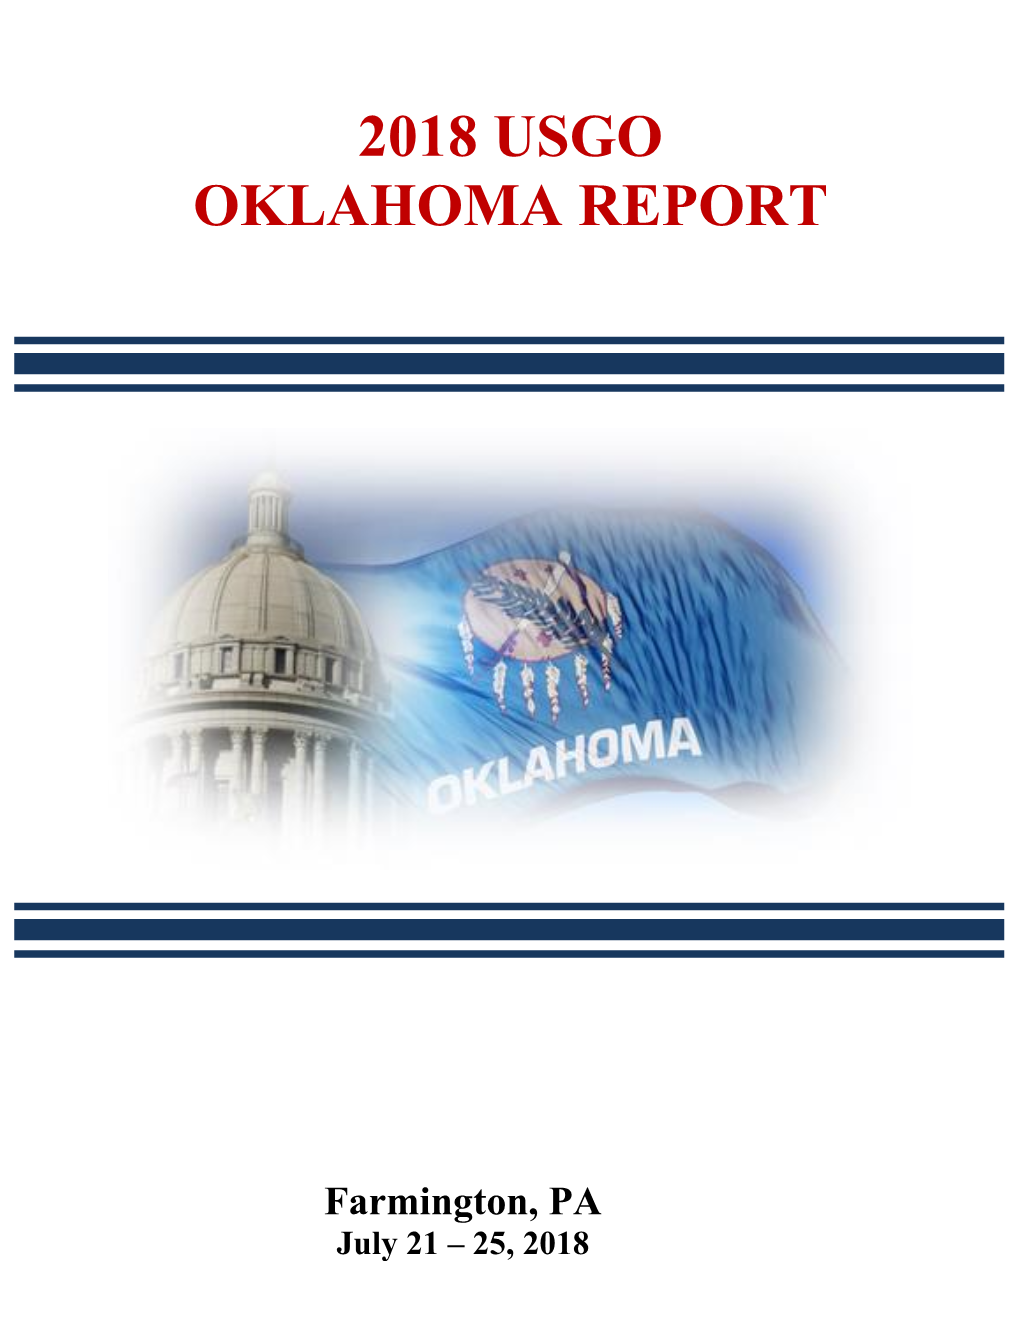 2018 Oklahoma State Report